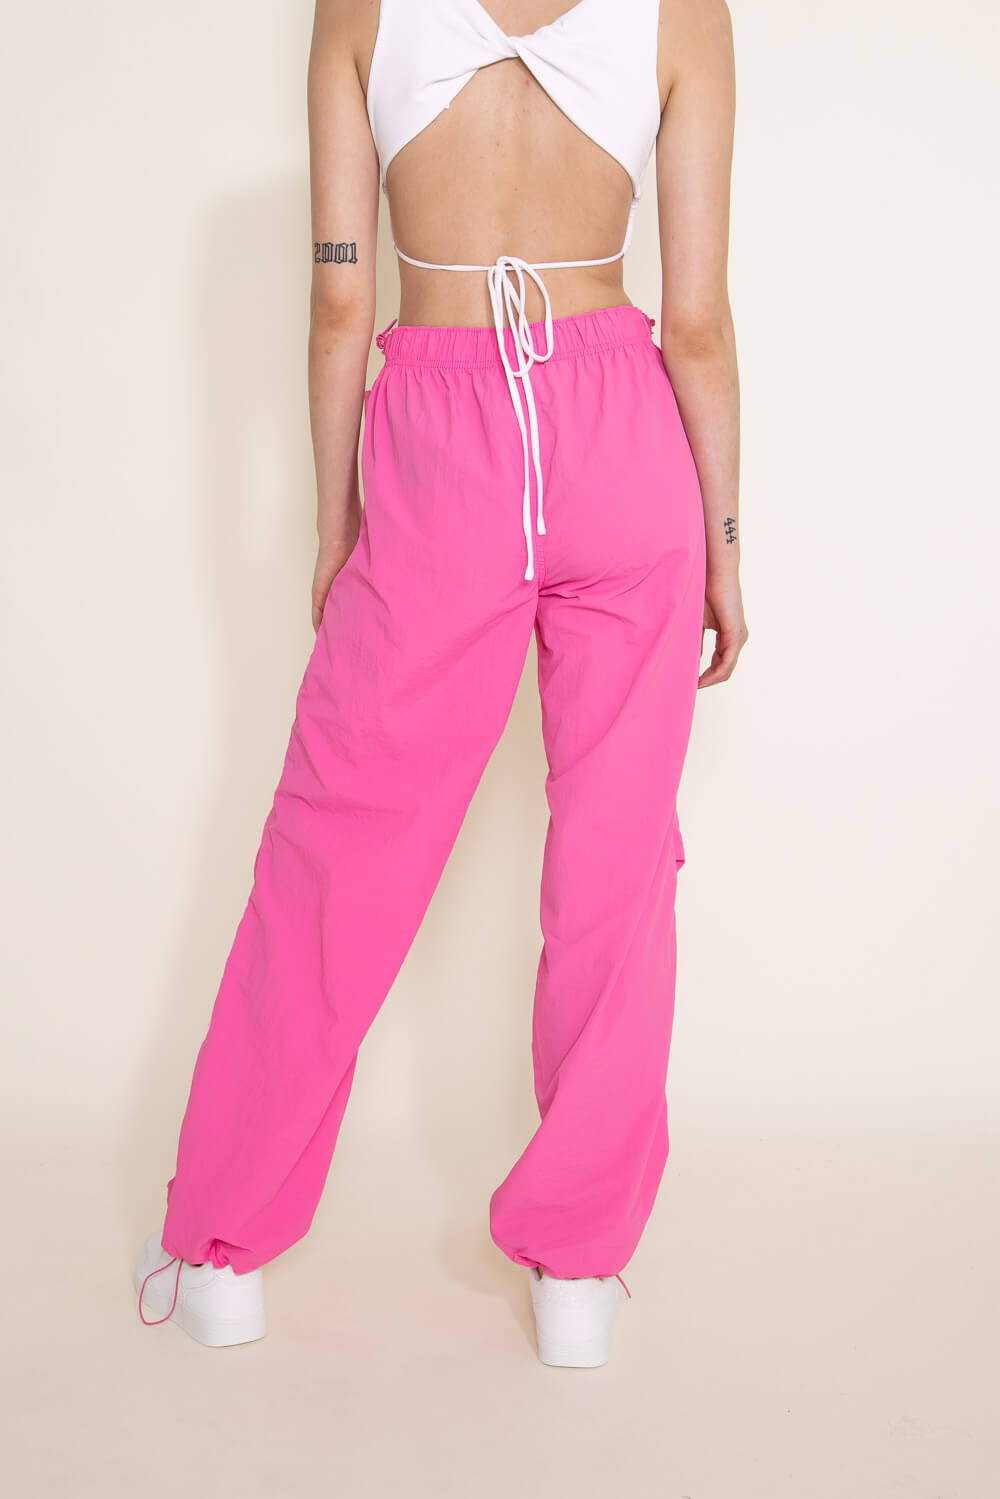 Girls Soft 100% Cotton Capri Leggings | Hot Pink